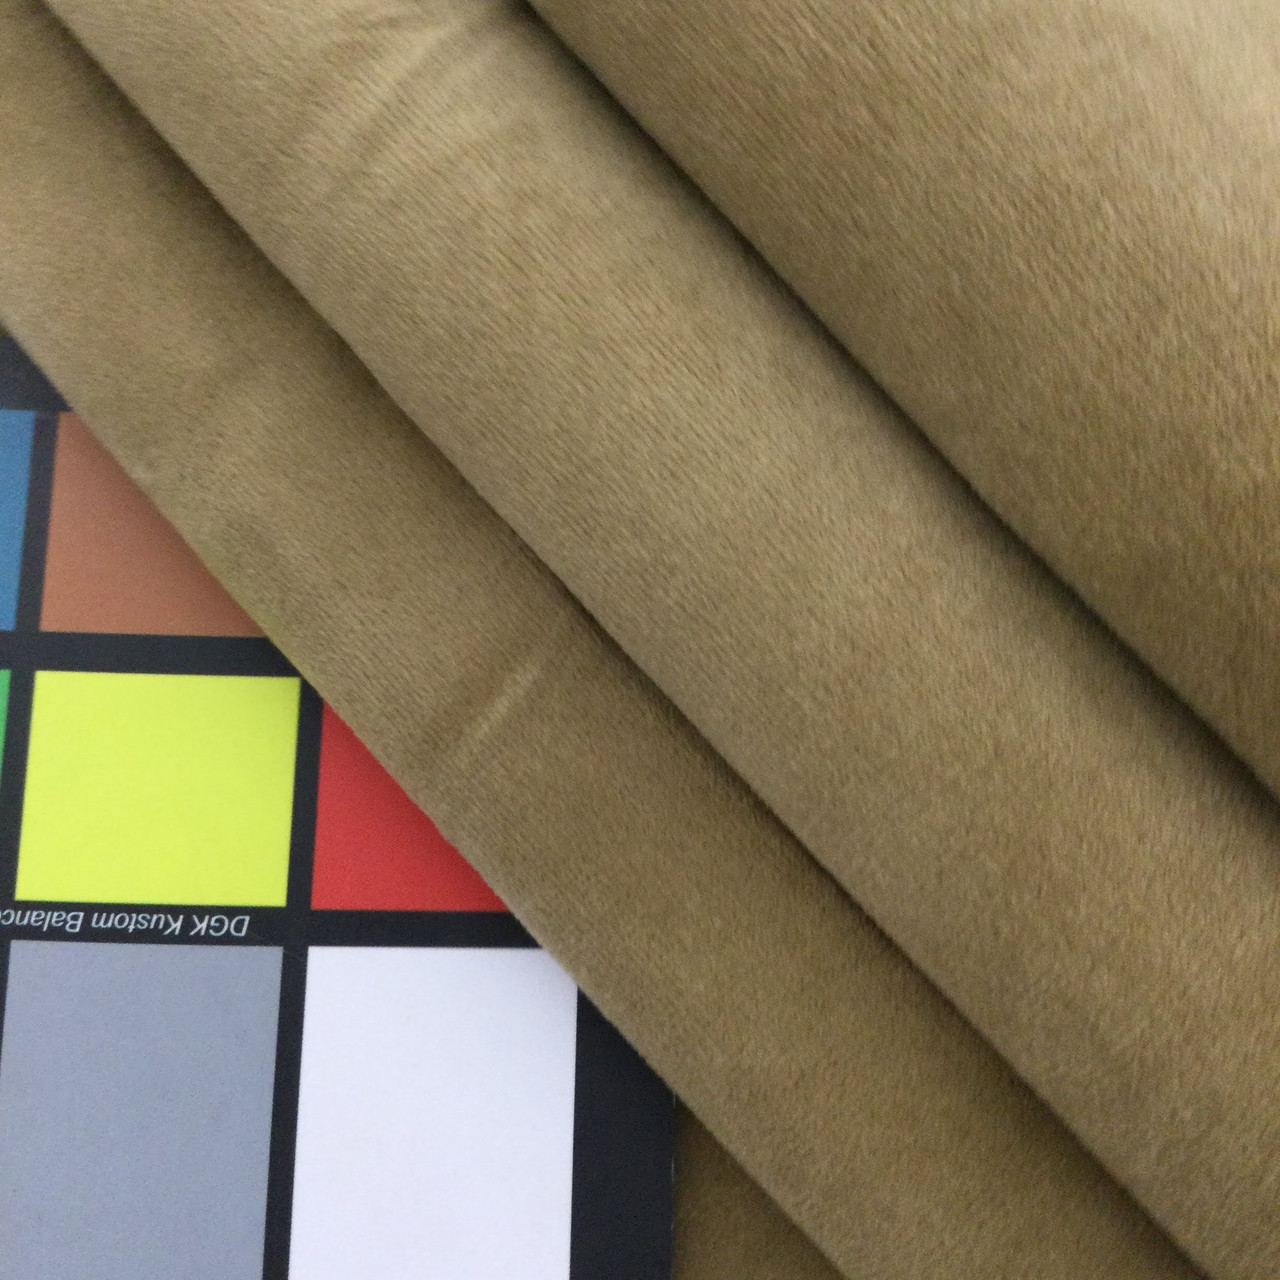 Brown Velvet Fabric 98126 – Fabrics4Fashion